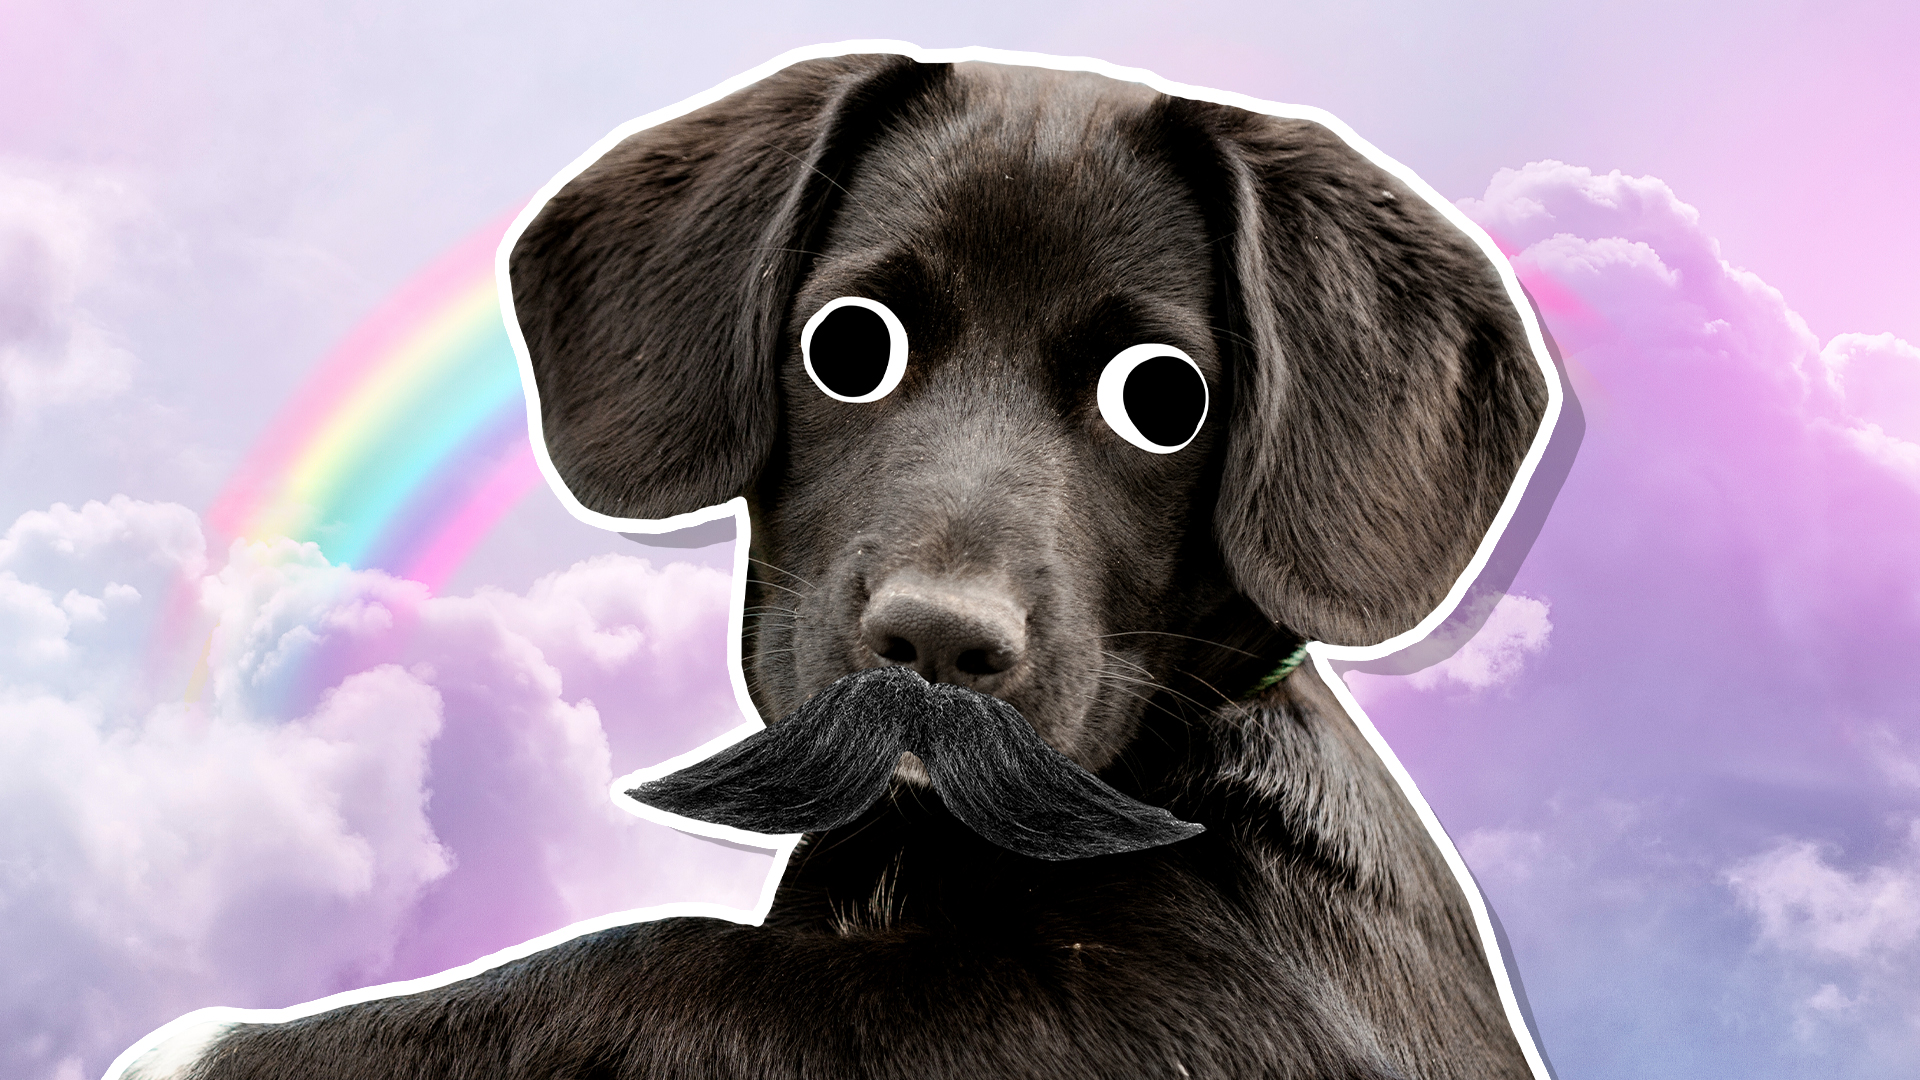 Sirius Black as a dog